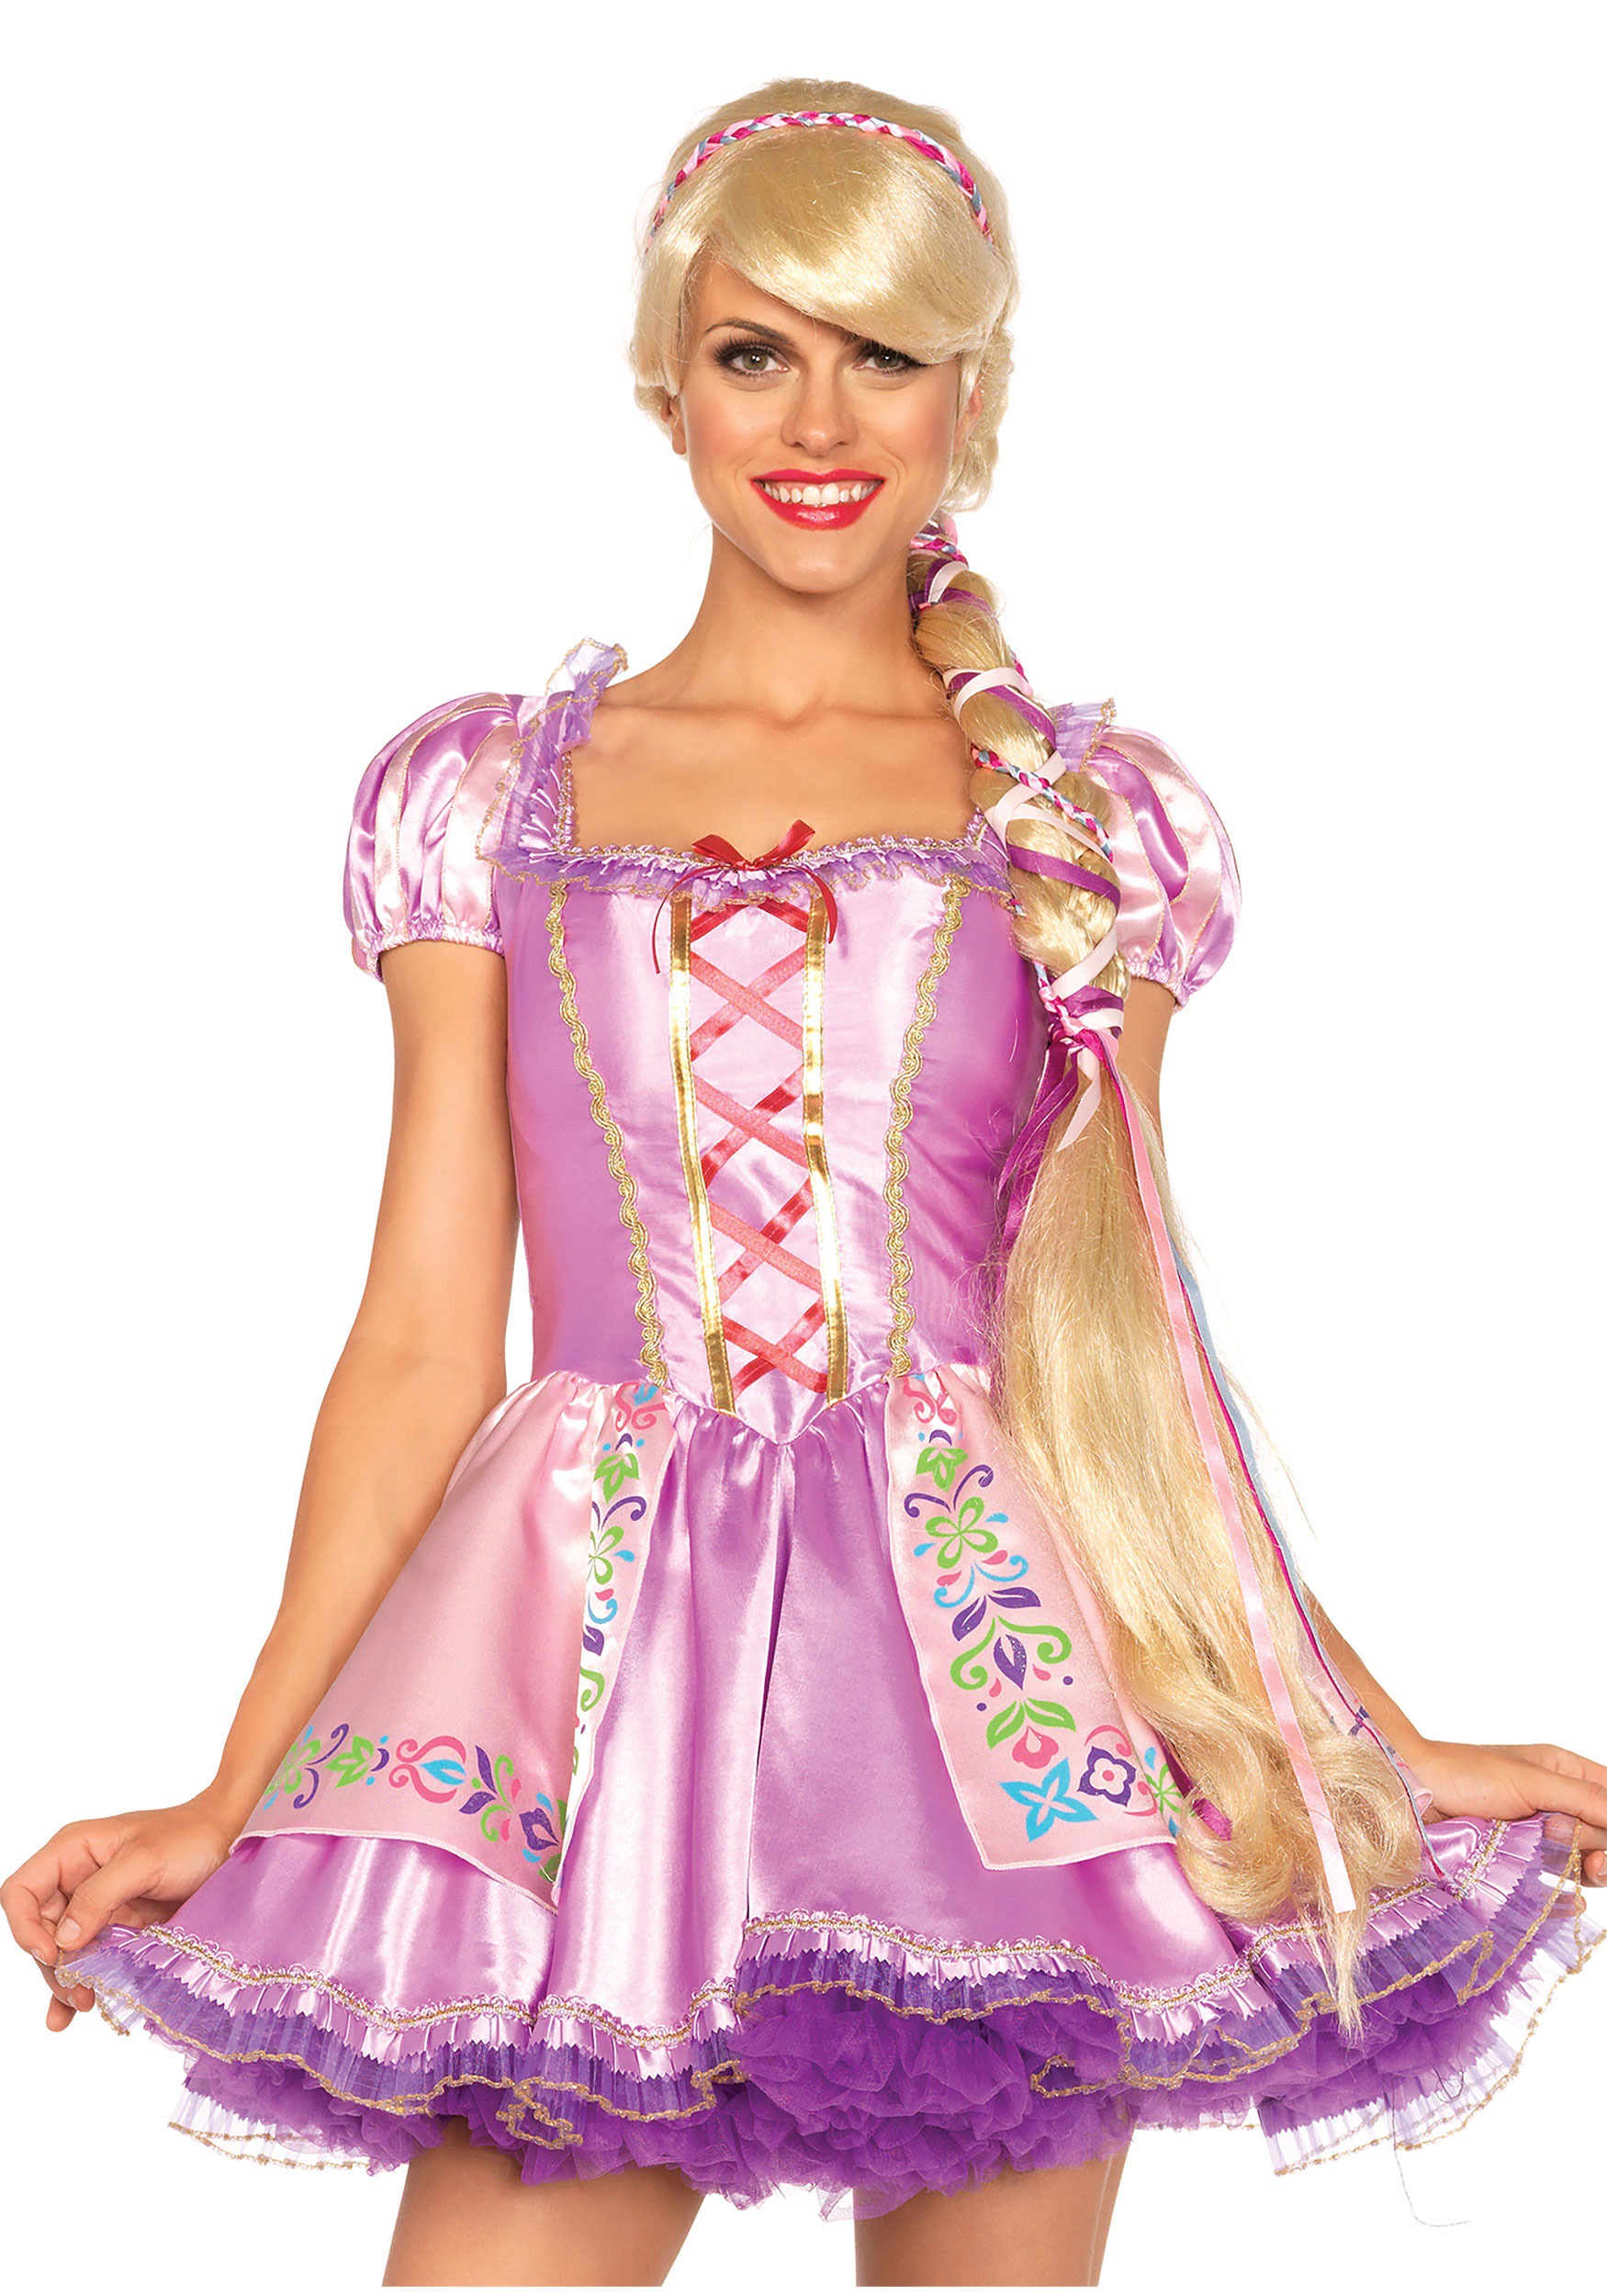 rapunzel costume for women